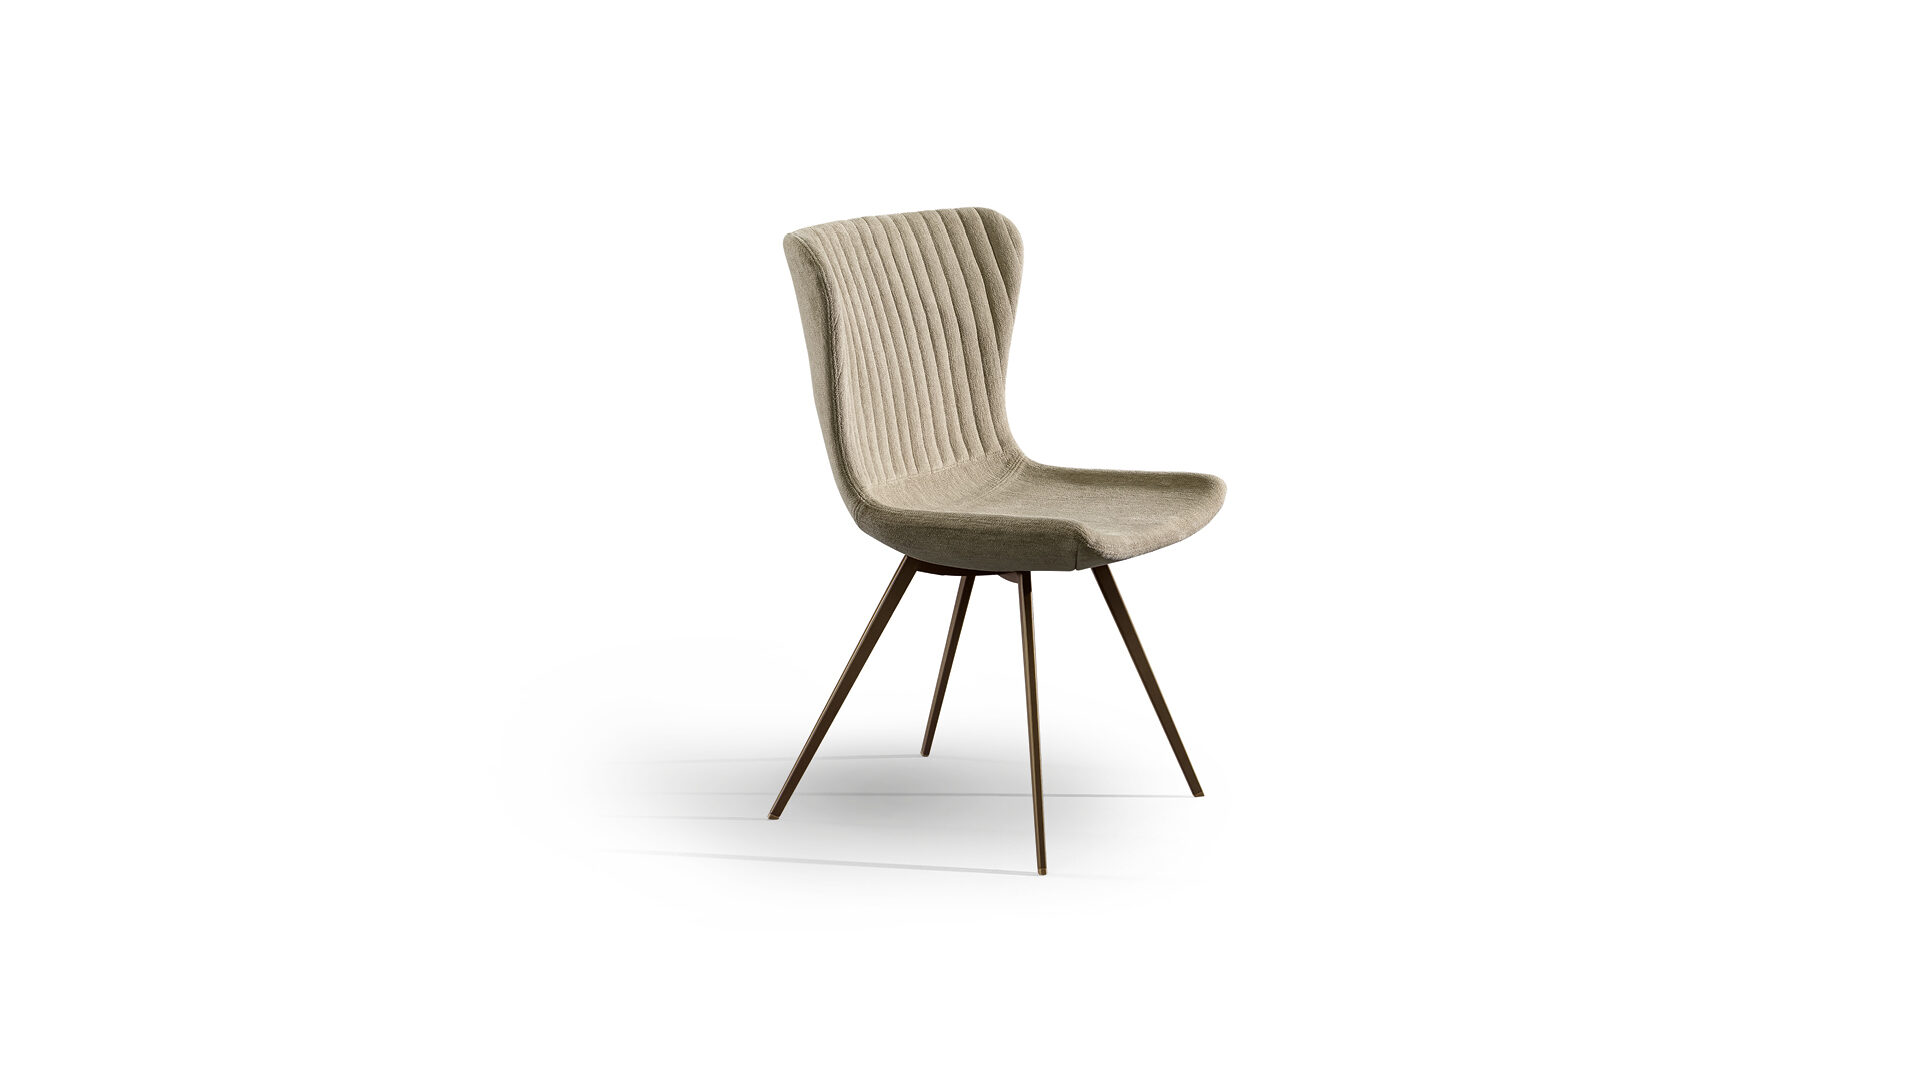 bonaldo-sedie-colibri-chair-stilllife-1920x1080-jpg